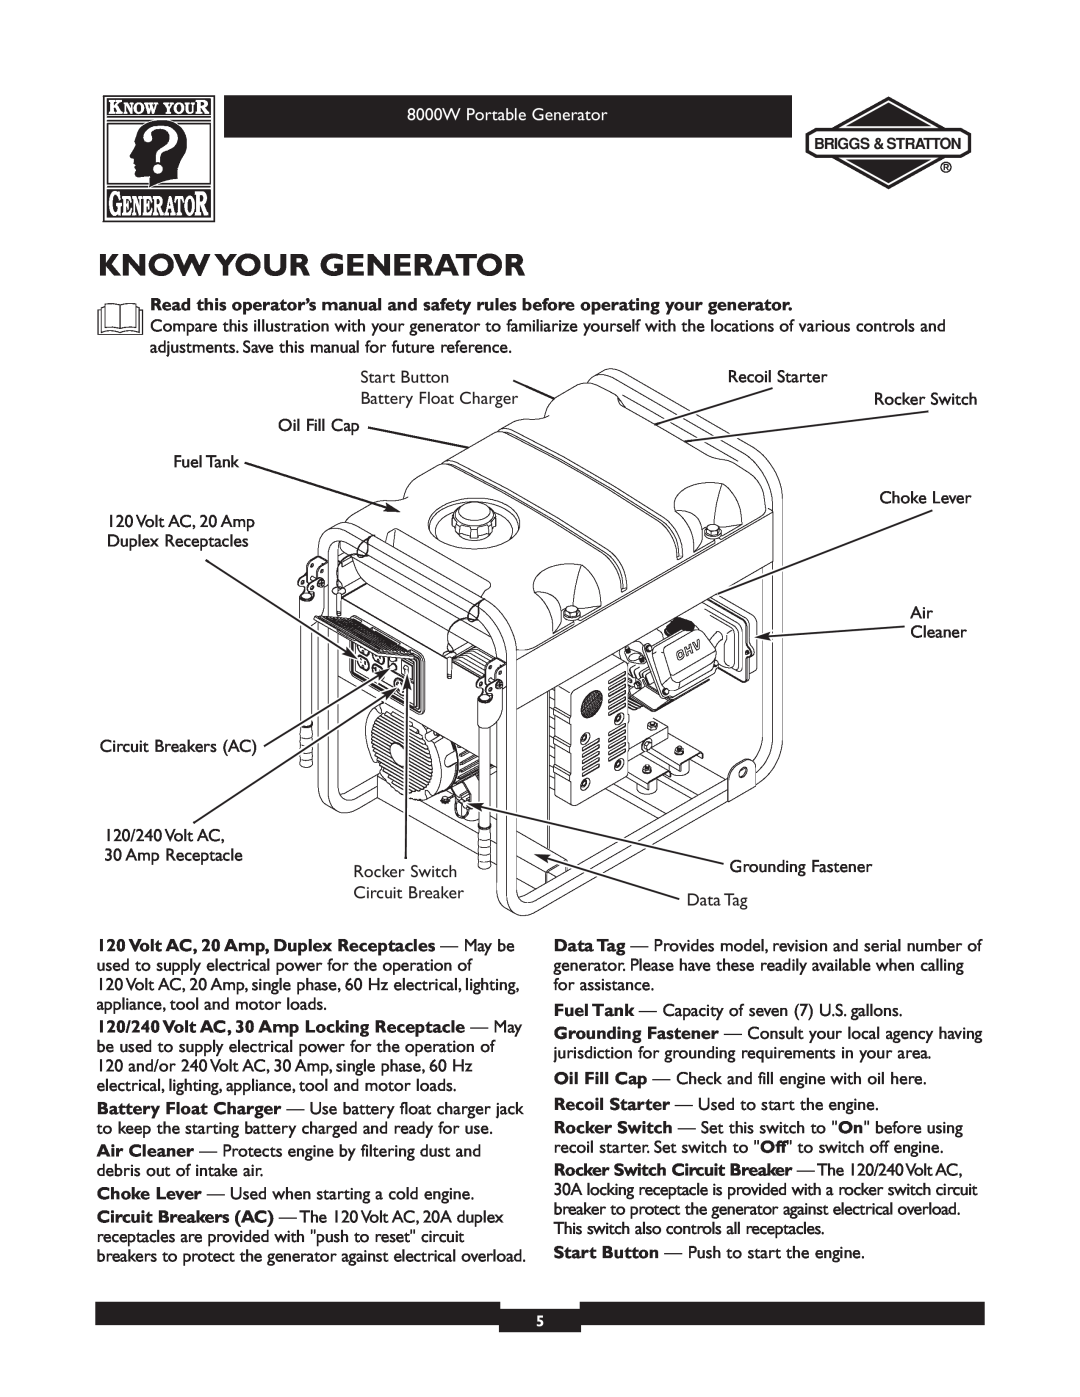 Briggs & Stratton 030210-2 manual Know Your Generator, 8000W Portable Generator 